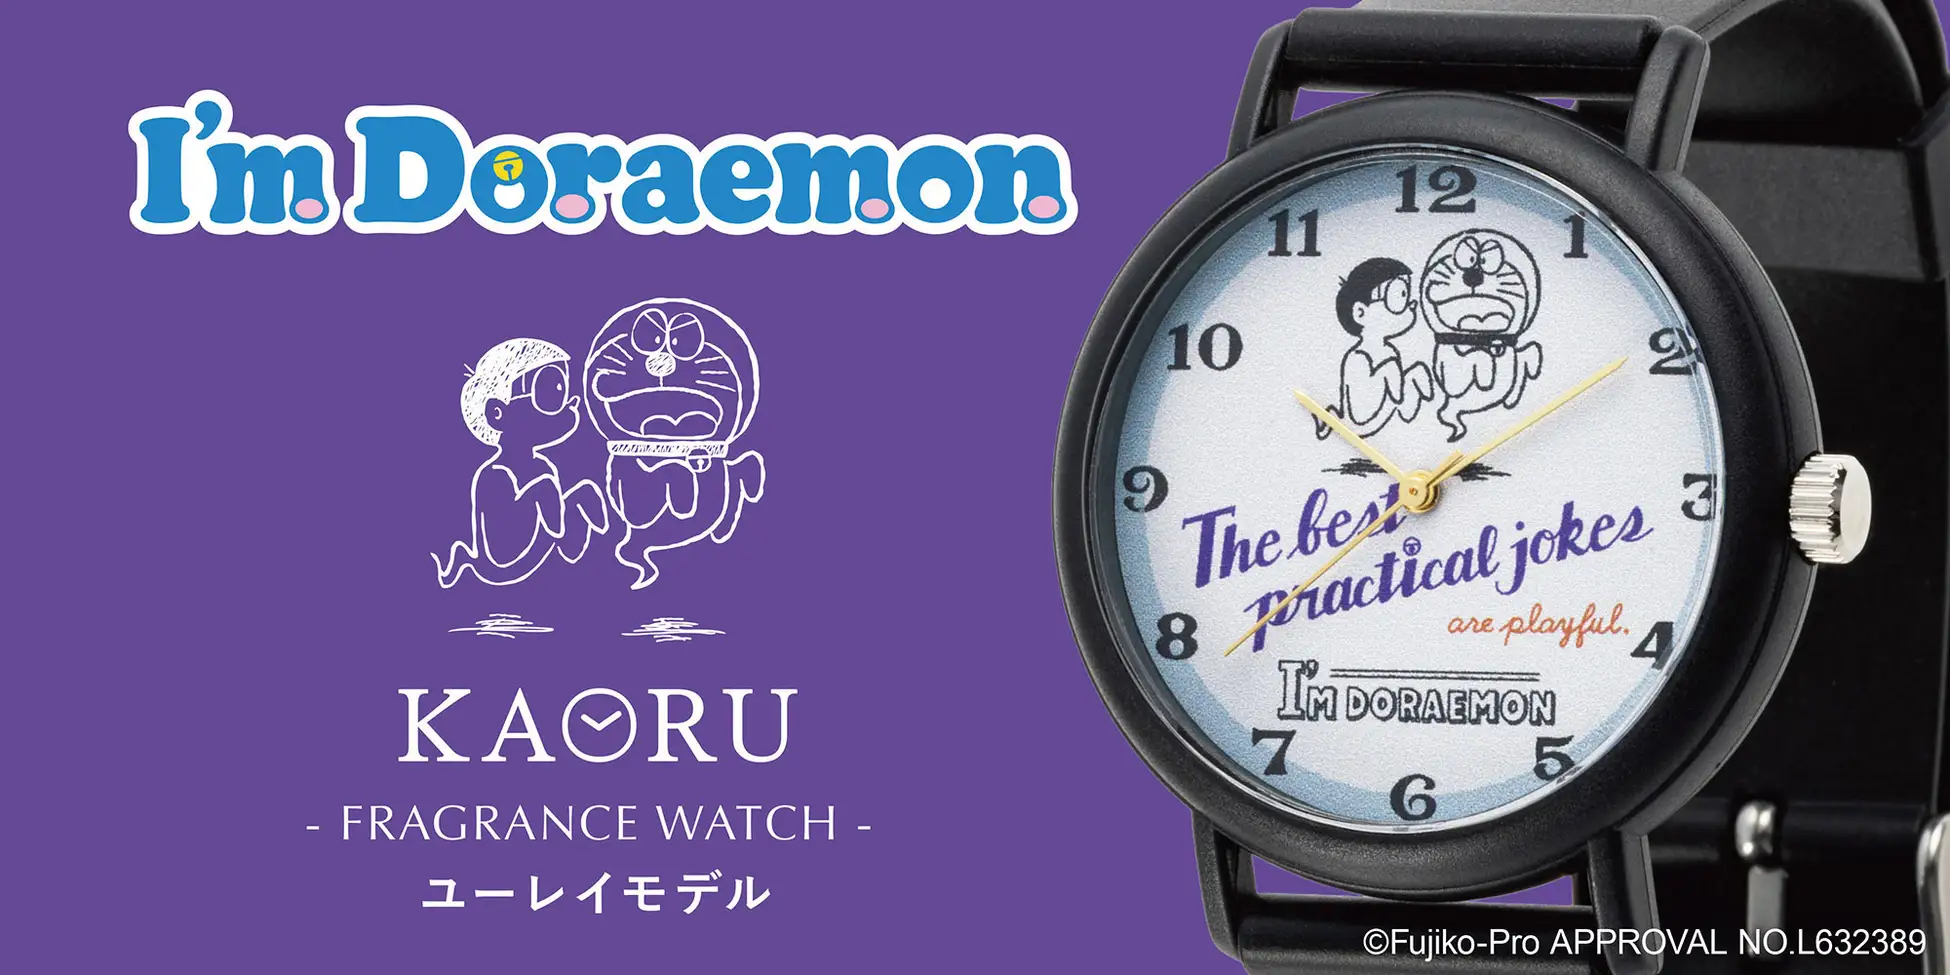 「I’m Doraemon」×「KAORU」ドラえもん ユーレイモデル